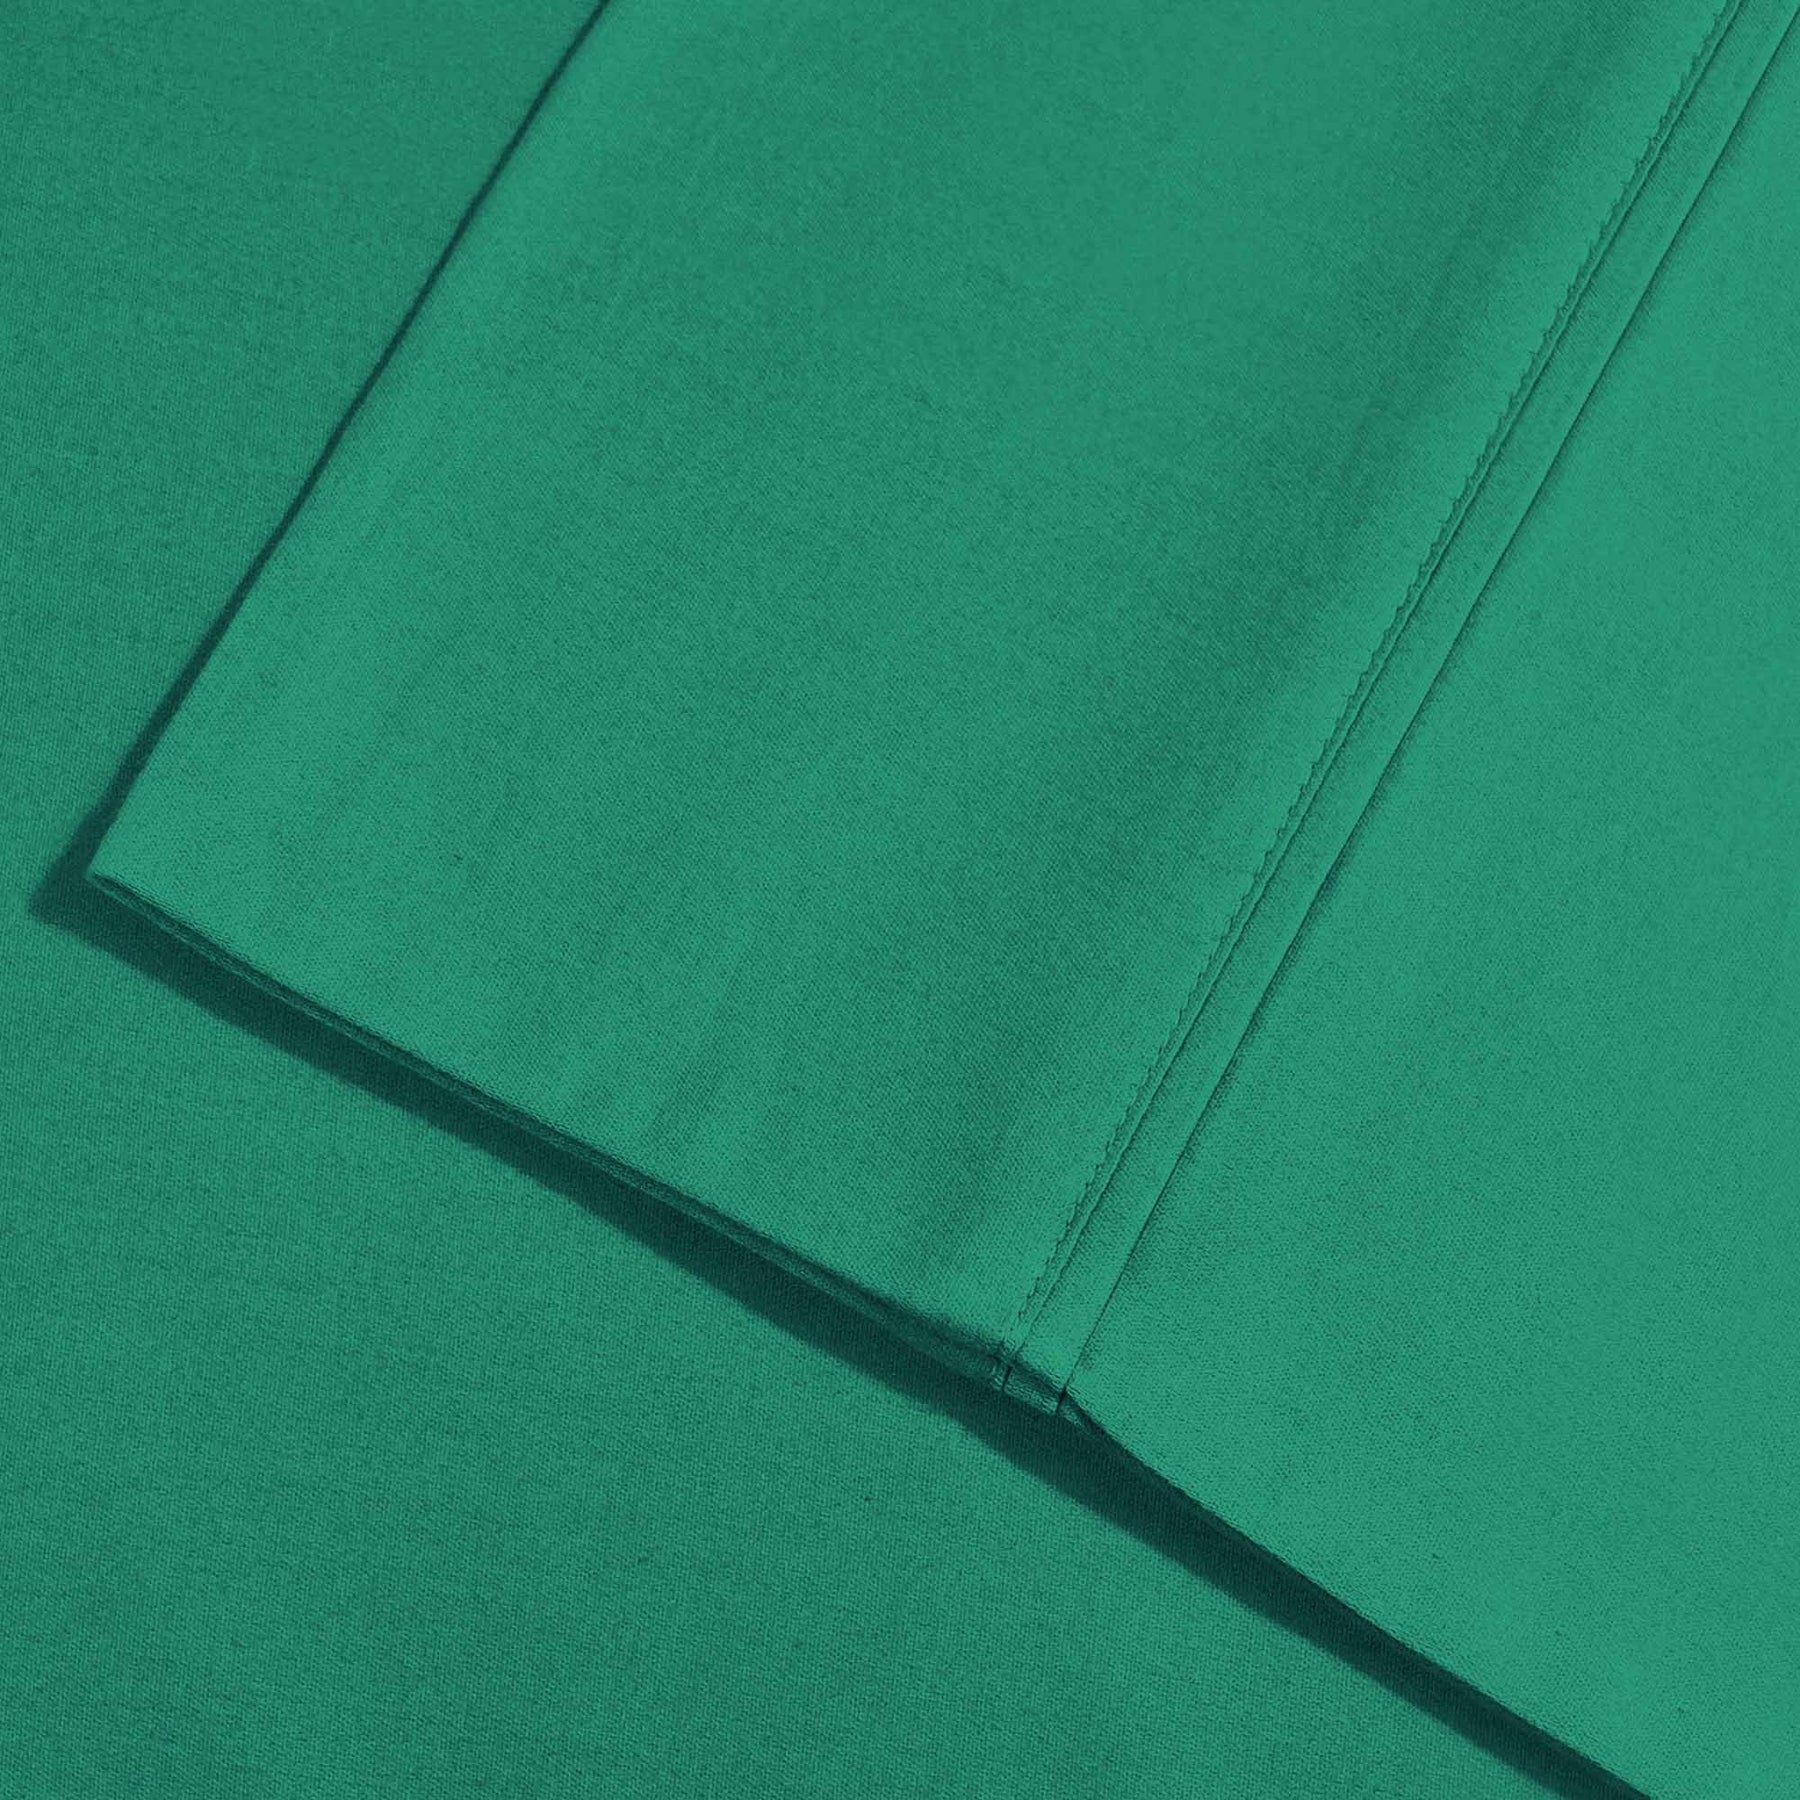 Superior Premium Plush Solid Deep Pocket Cotton Blend Bed Sheet Set - Hunter Green